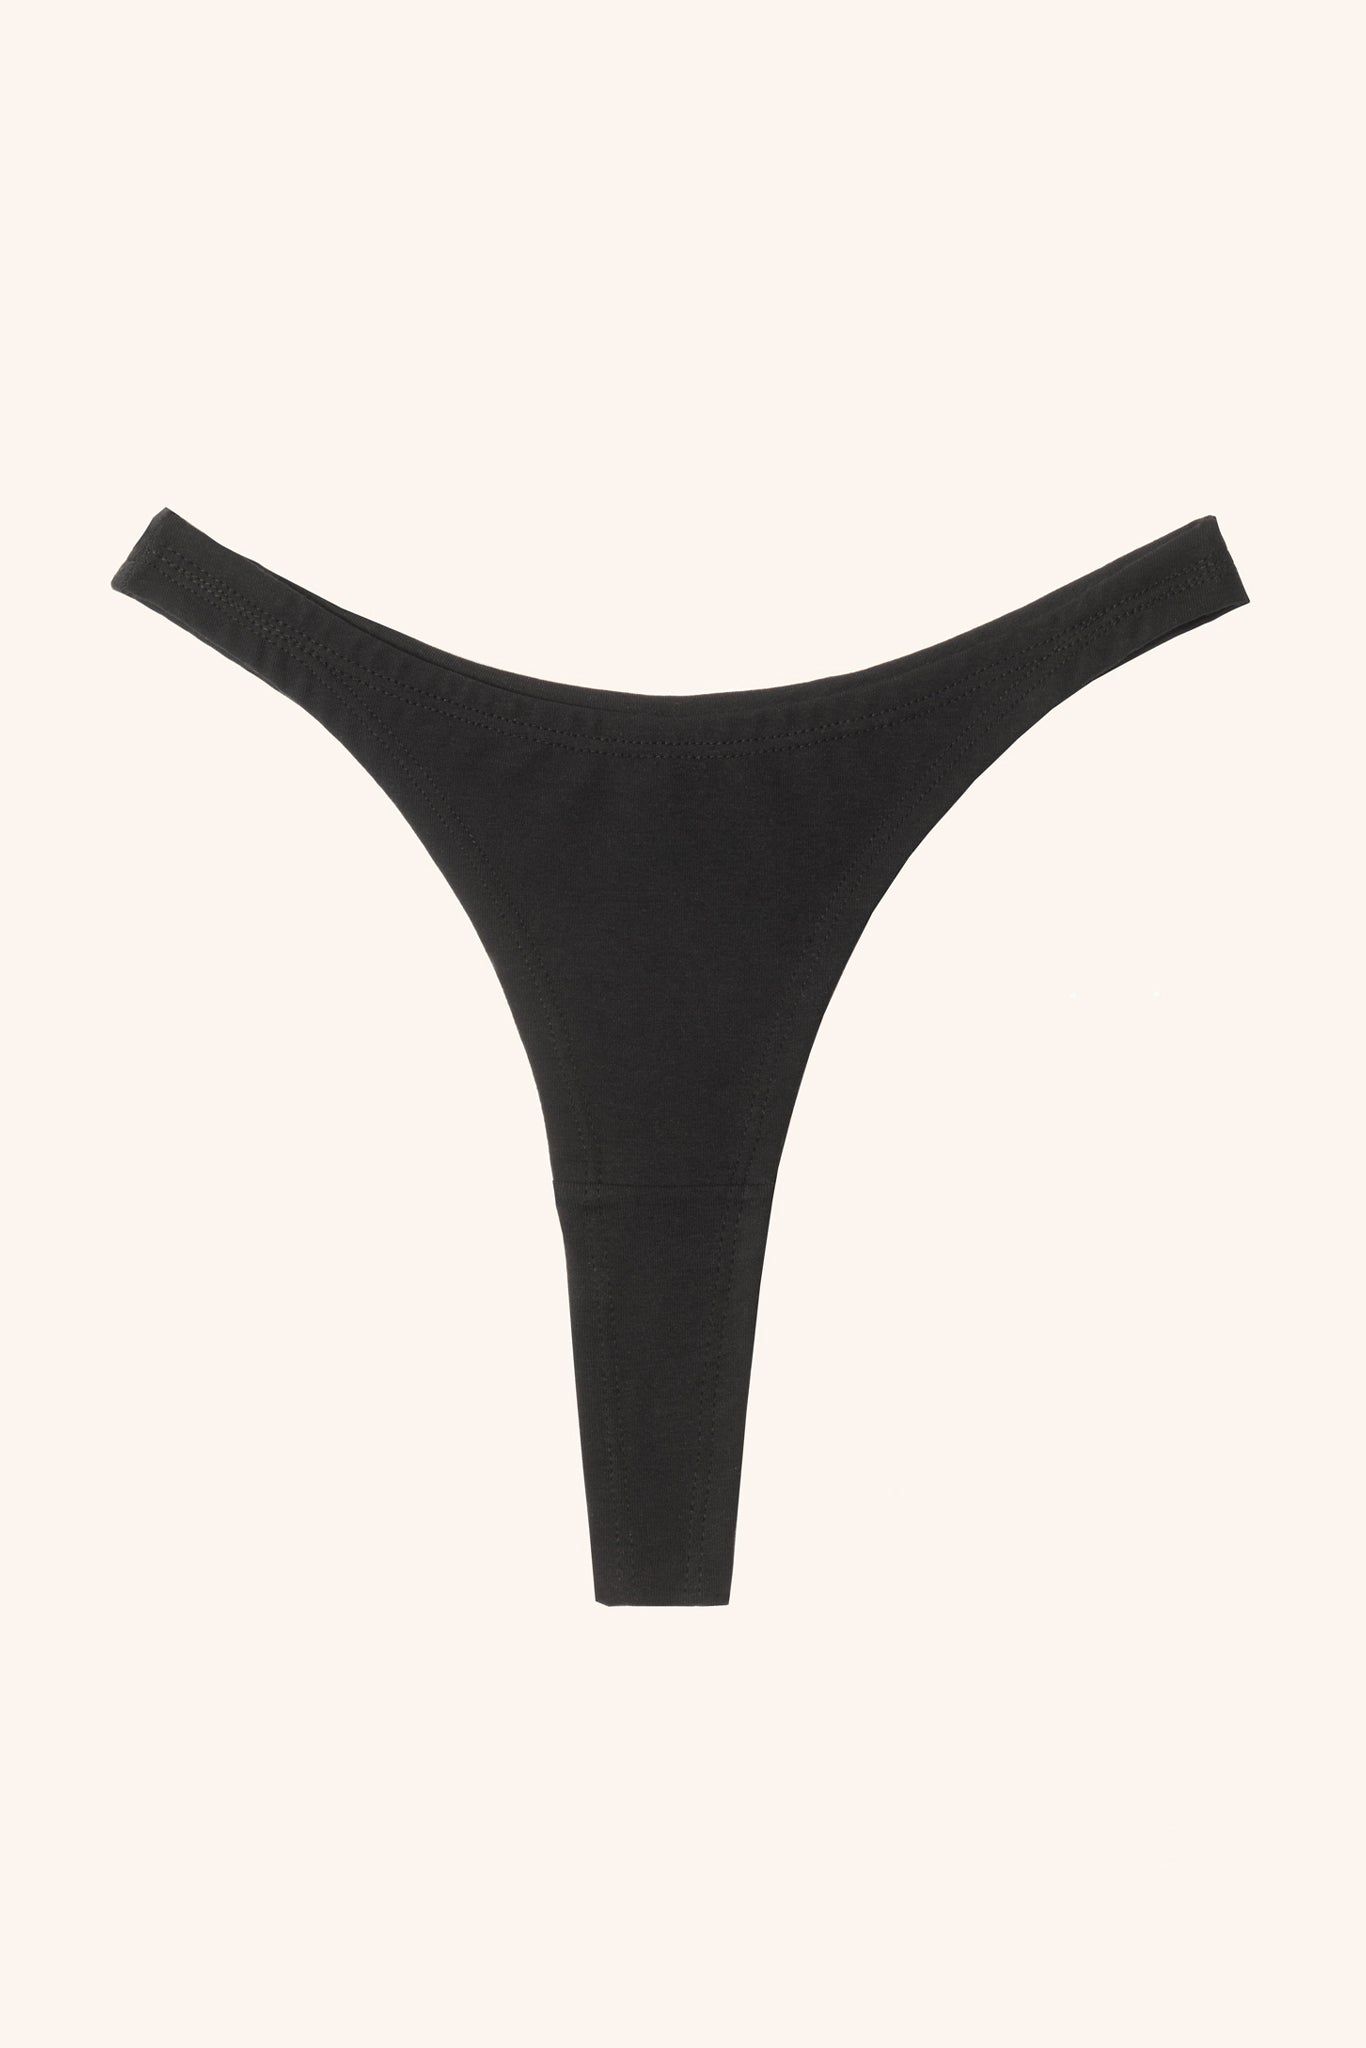 G-string Panties Cotton Women's Underwear Comfortable Casual T